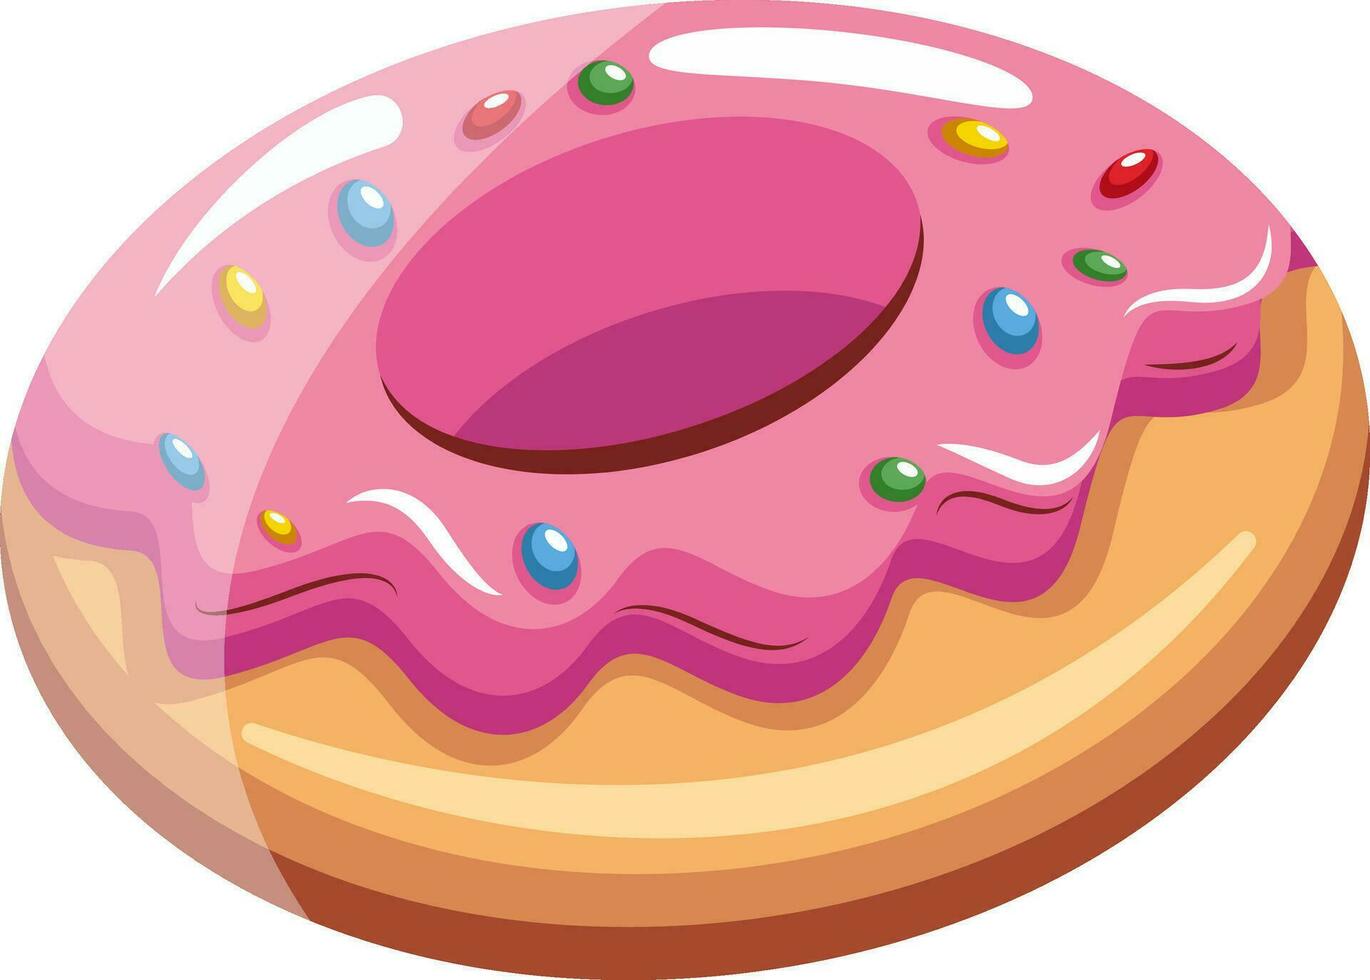 Sweet pink donut, illustration, vector on white background.